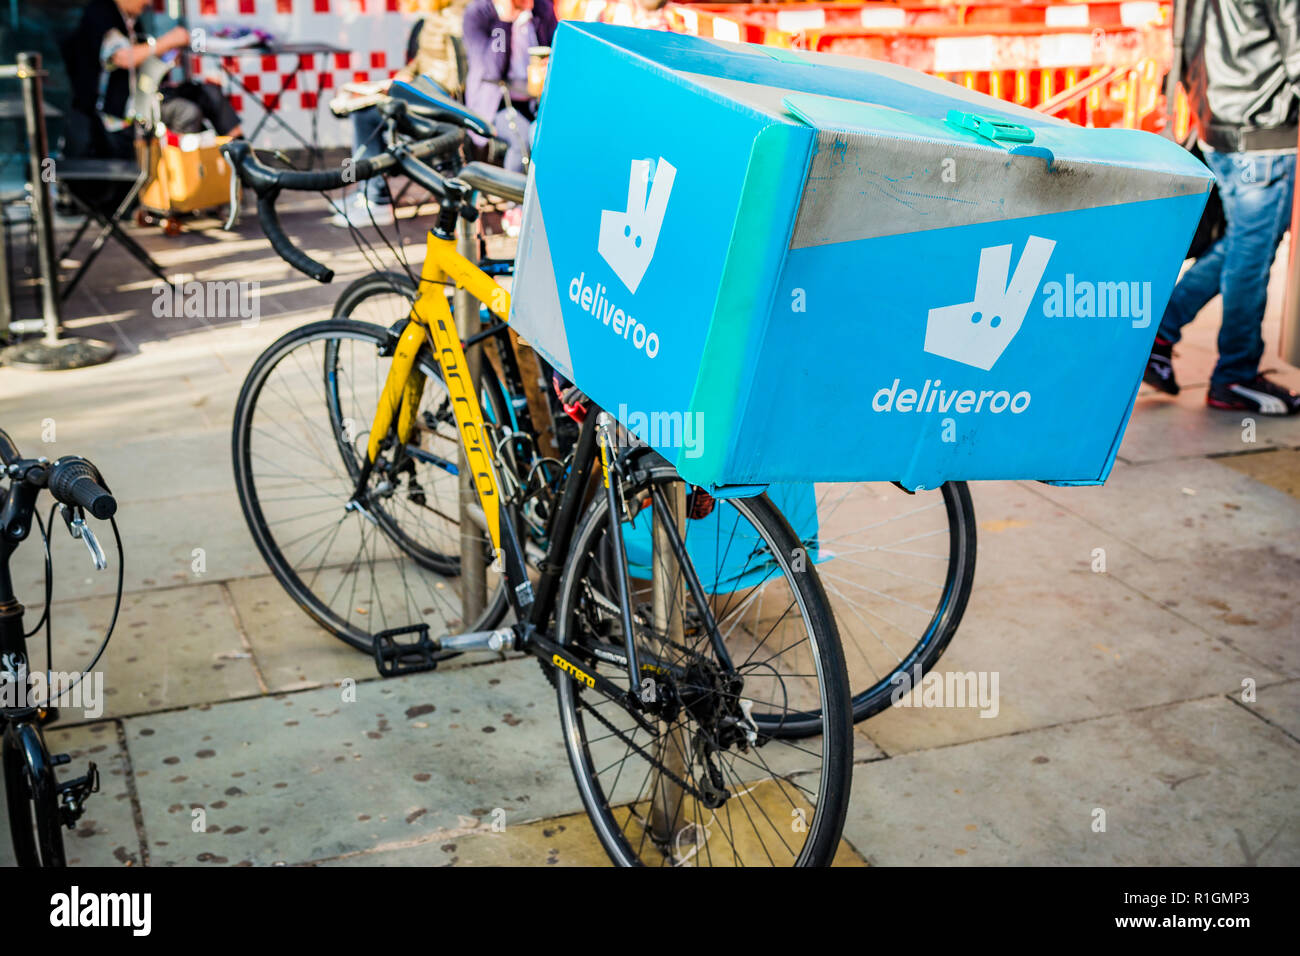 Deliveroo Food Delivery Bikes. London, England, United Kingdom. Stock Photo